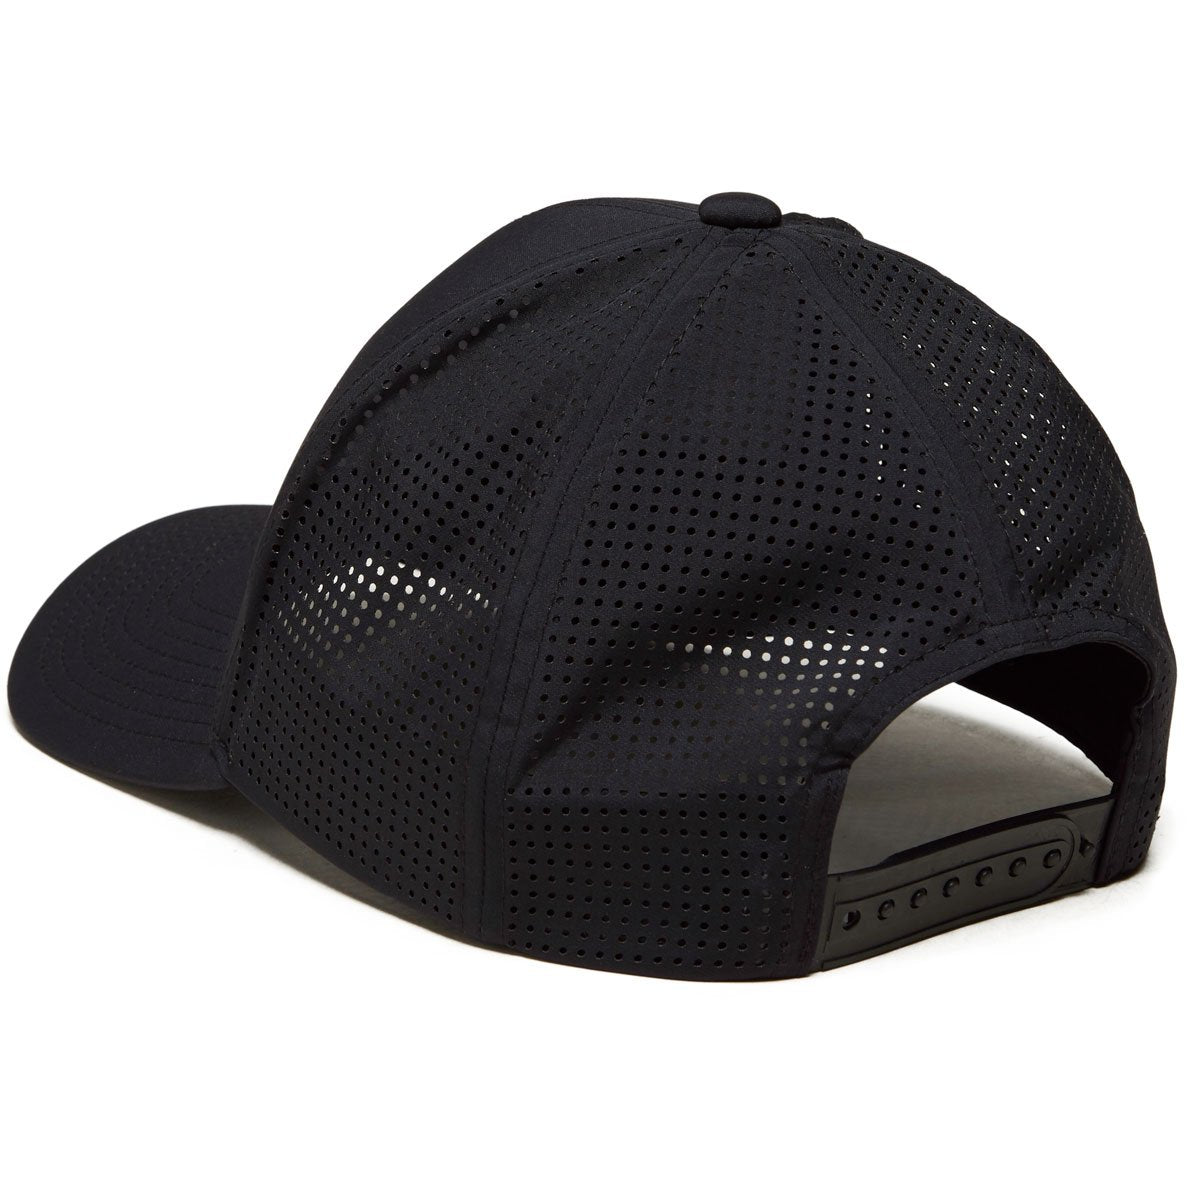 Brixton Crest X Mp Snapback Hat - Black image 2